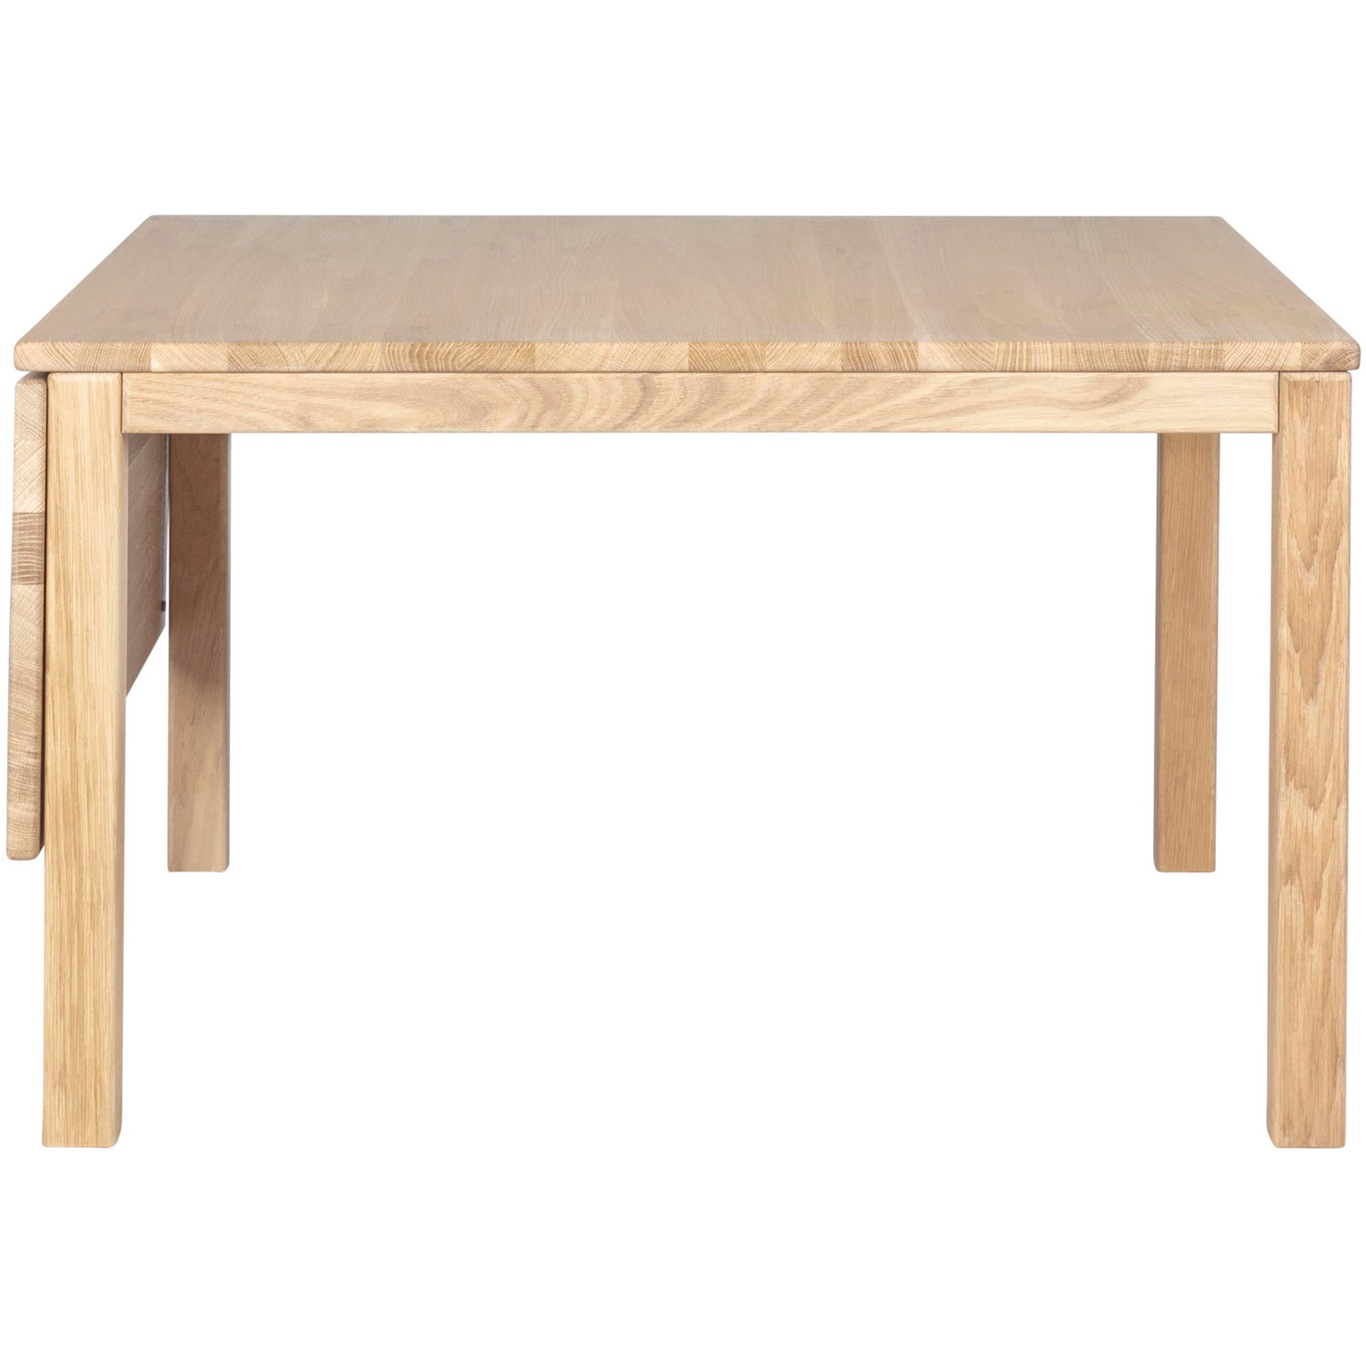 Klassik 5D Coffee Table With Drop-Leaf, 85x85 cm, Oiled Oak